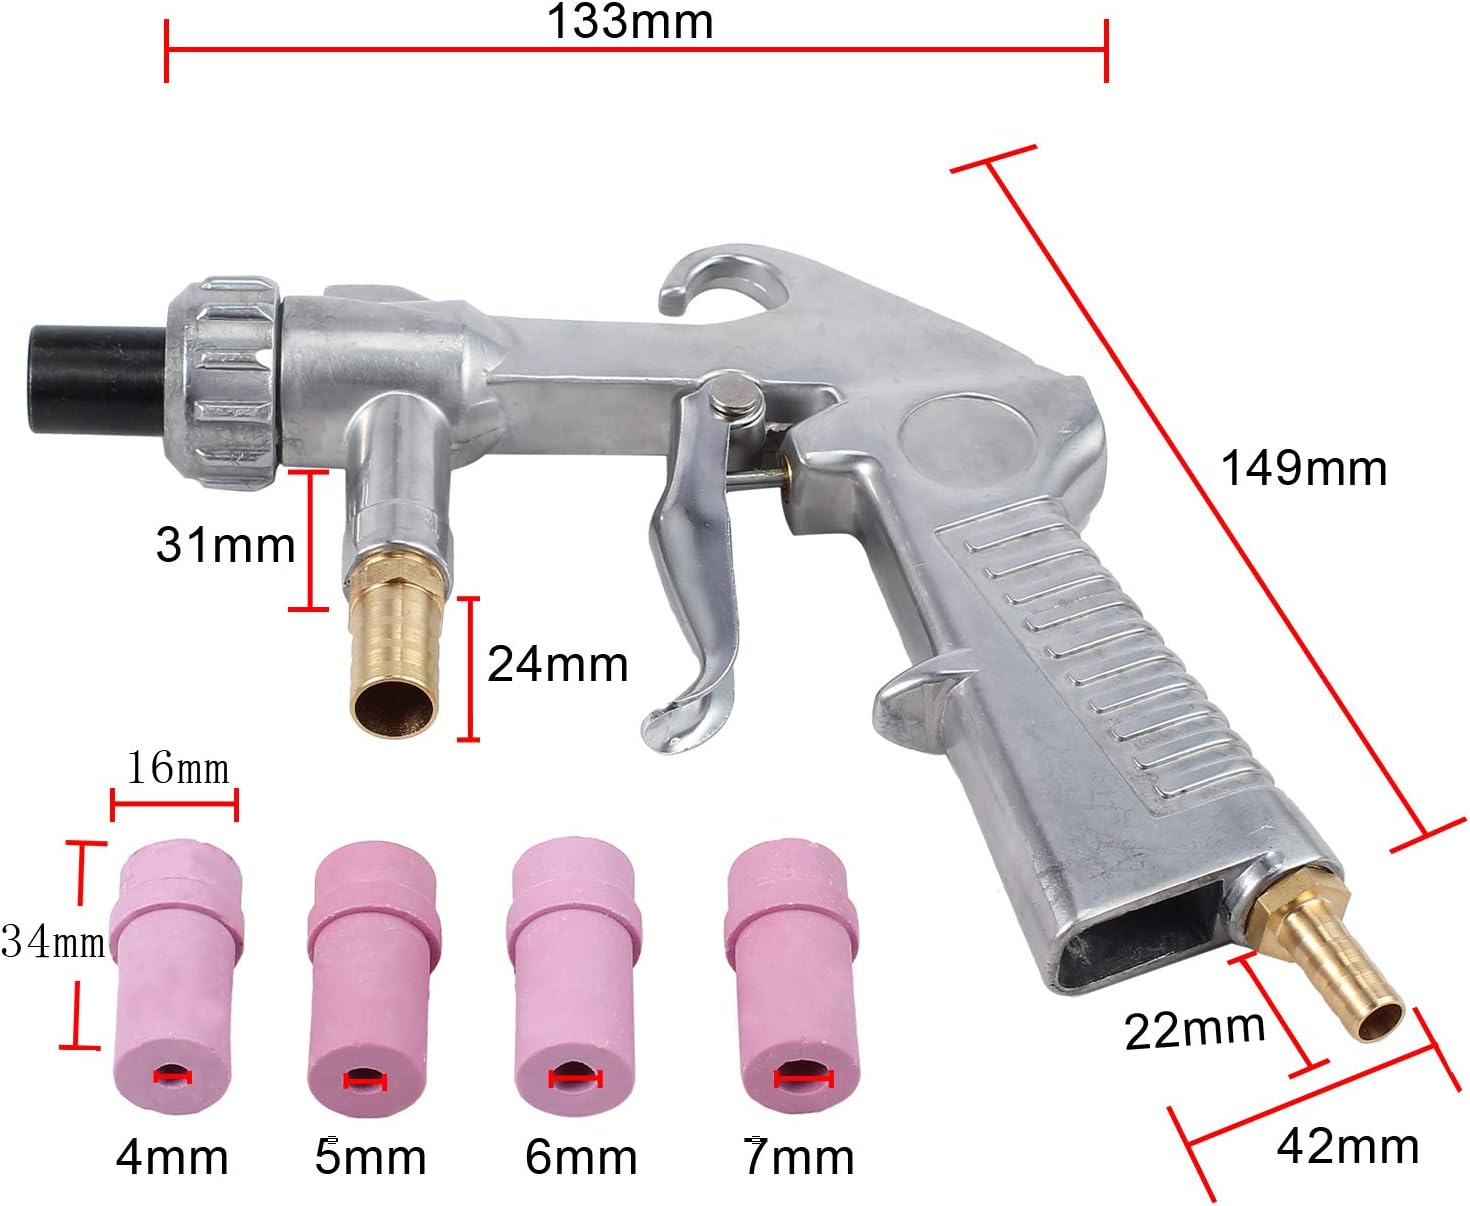 Fedlink AMTOVL Sand Blasting Gun Sandblaster + 4Pcs Ceramic Nozzles + Extra Iron Nozzle Tip Set